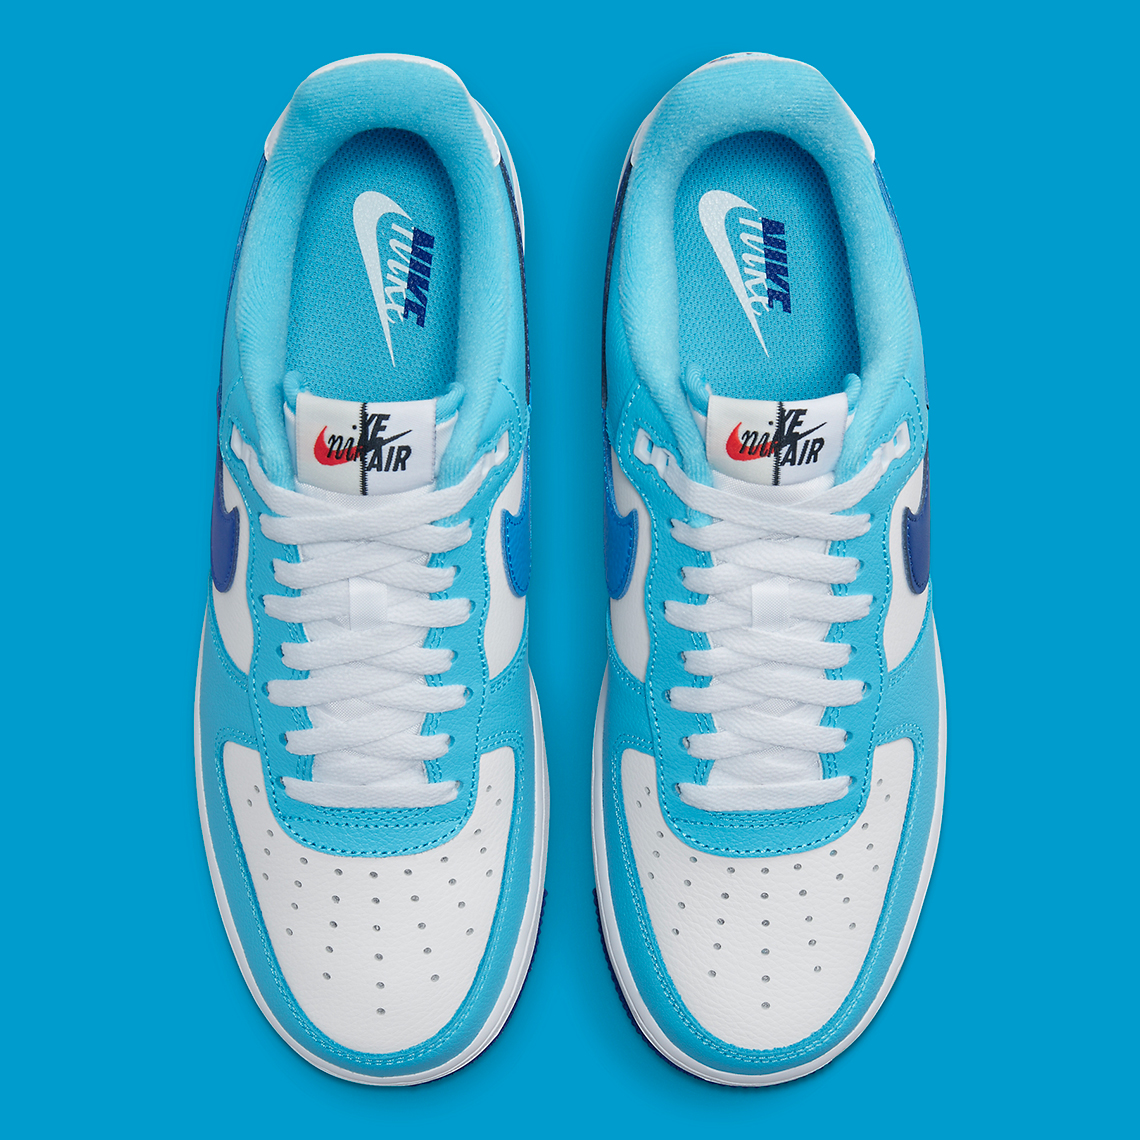 Nike Air Force 1 Low Split - Light Photo Blue sneakers